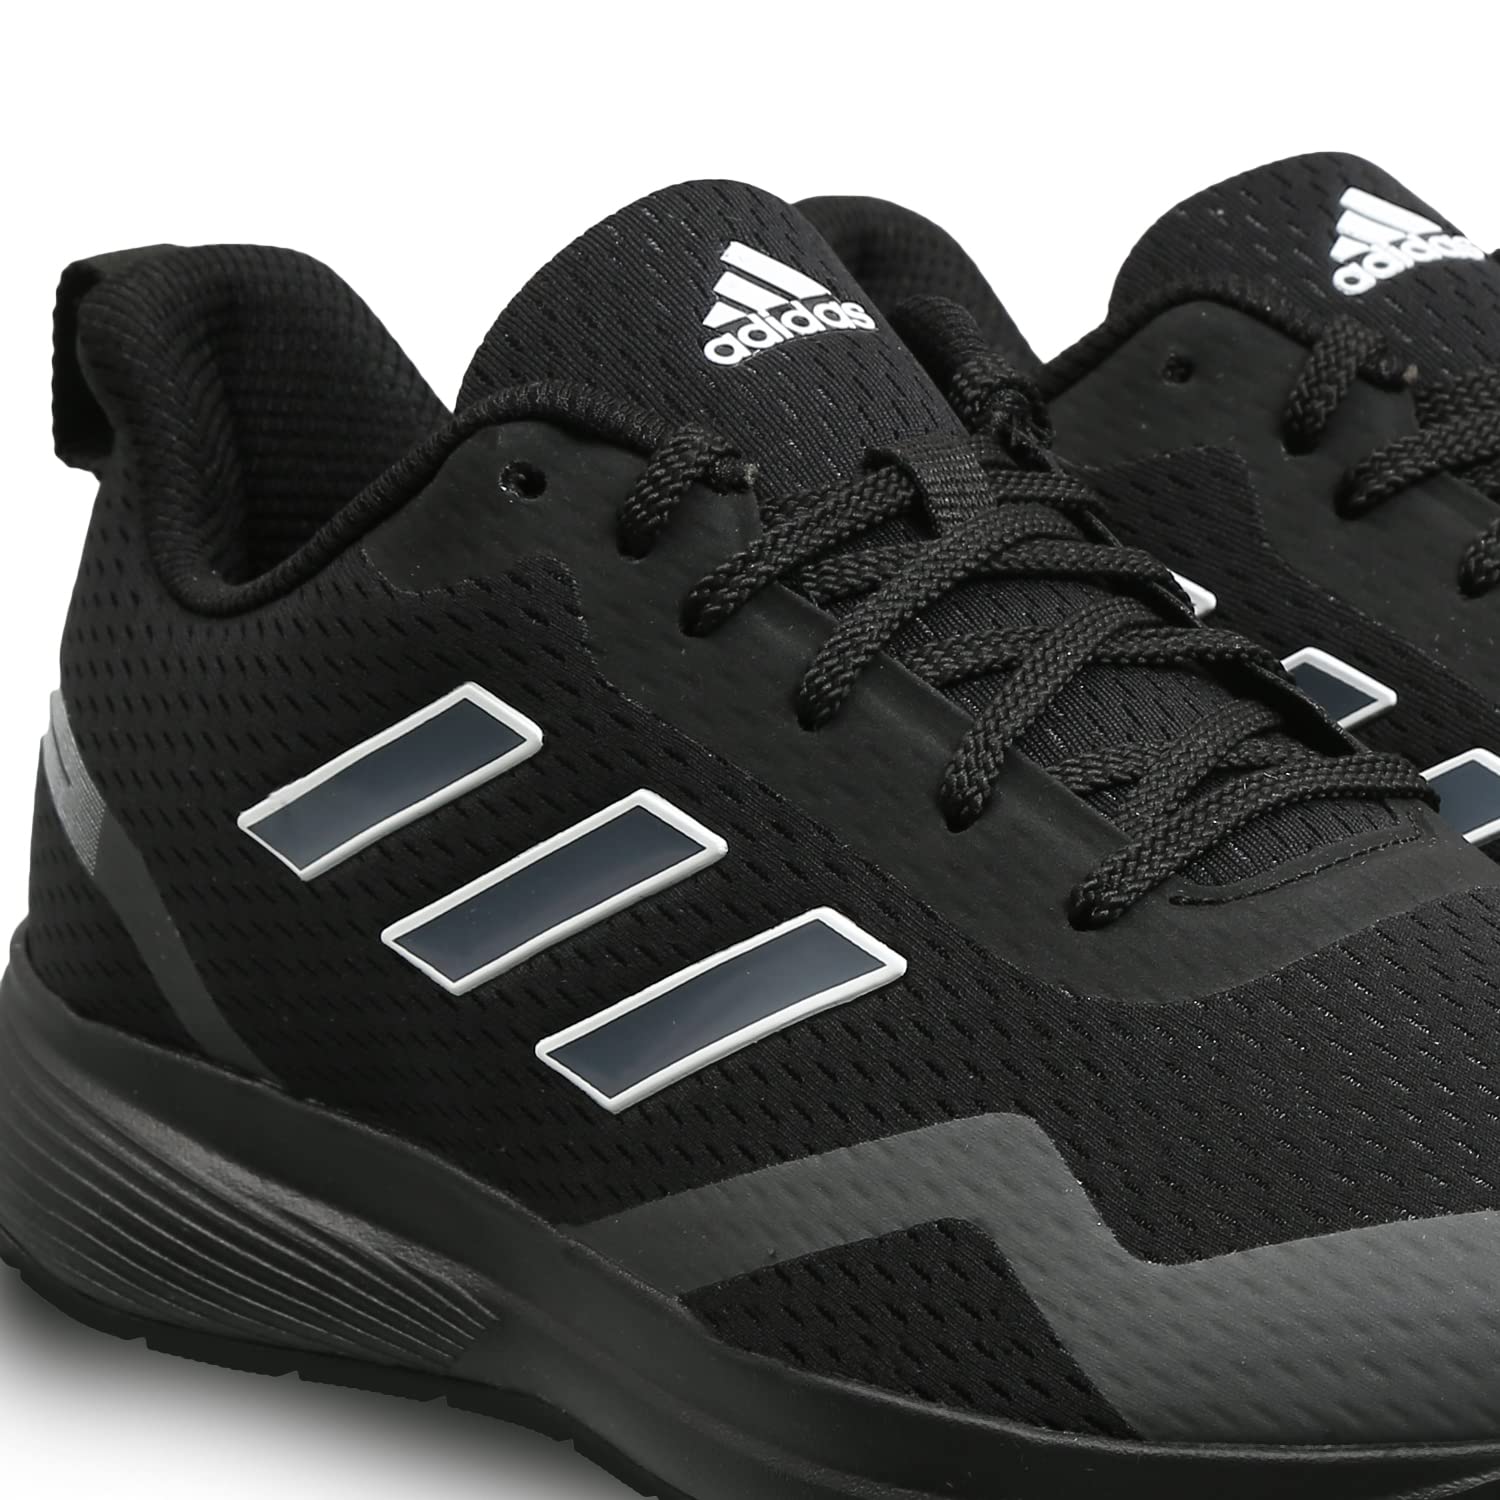 Adidas Mens Ampligy M Running Shoe